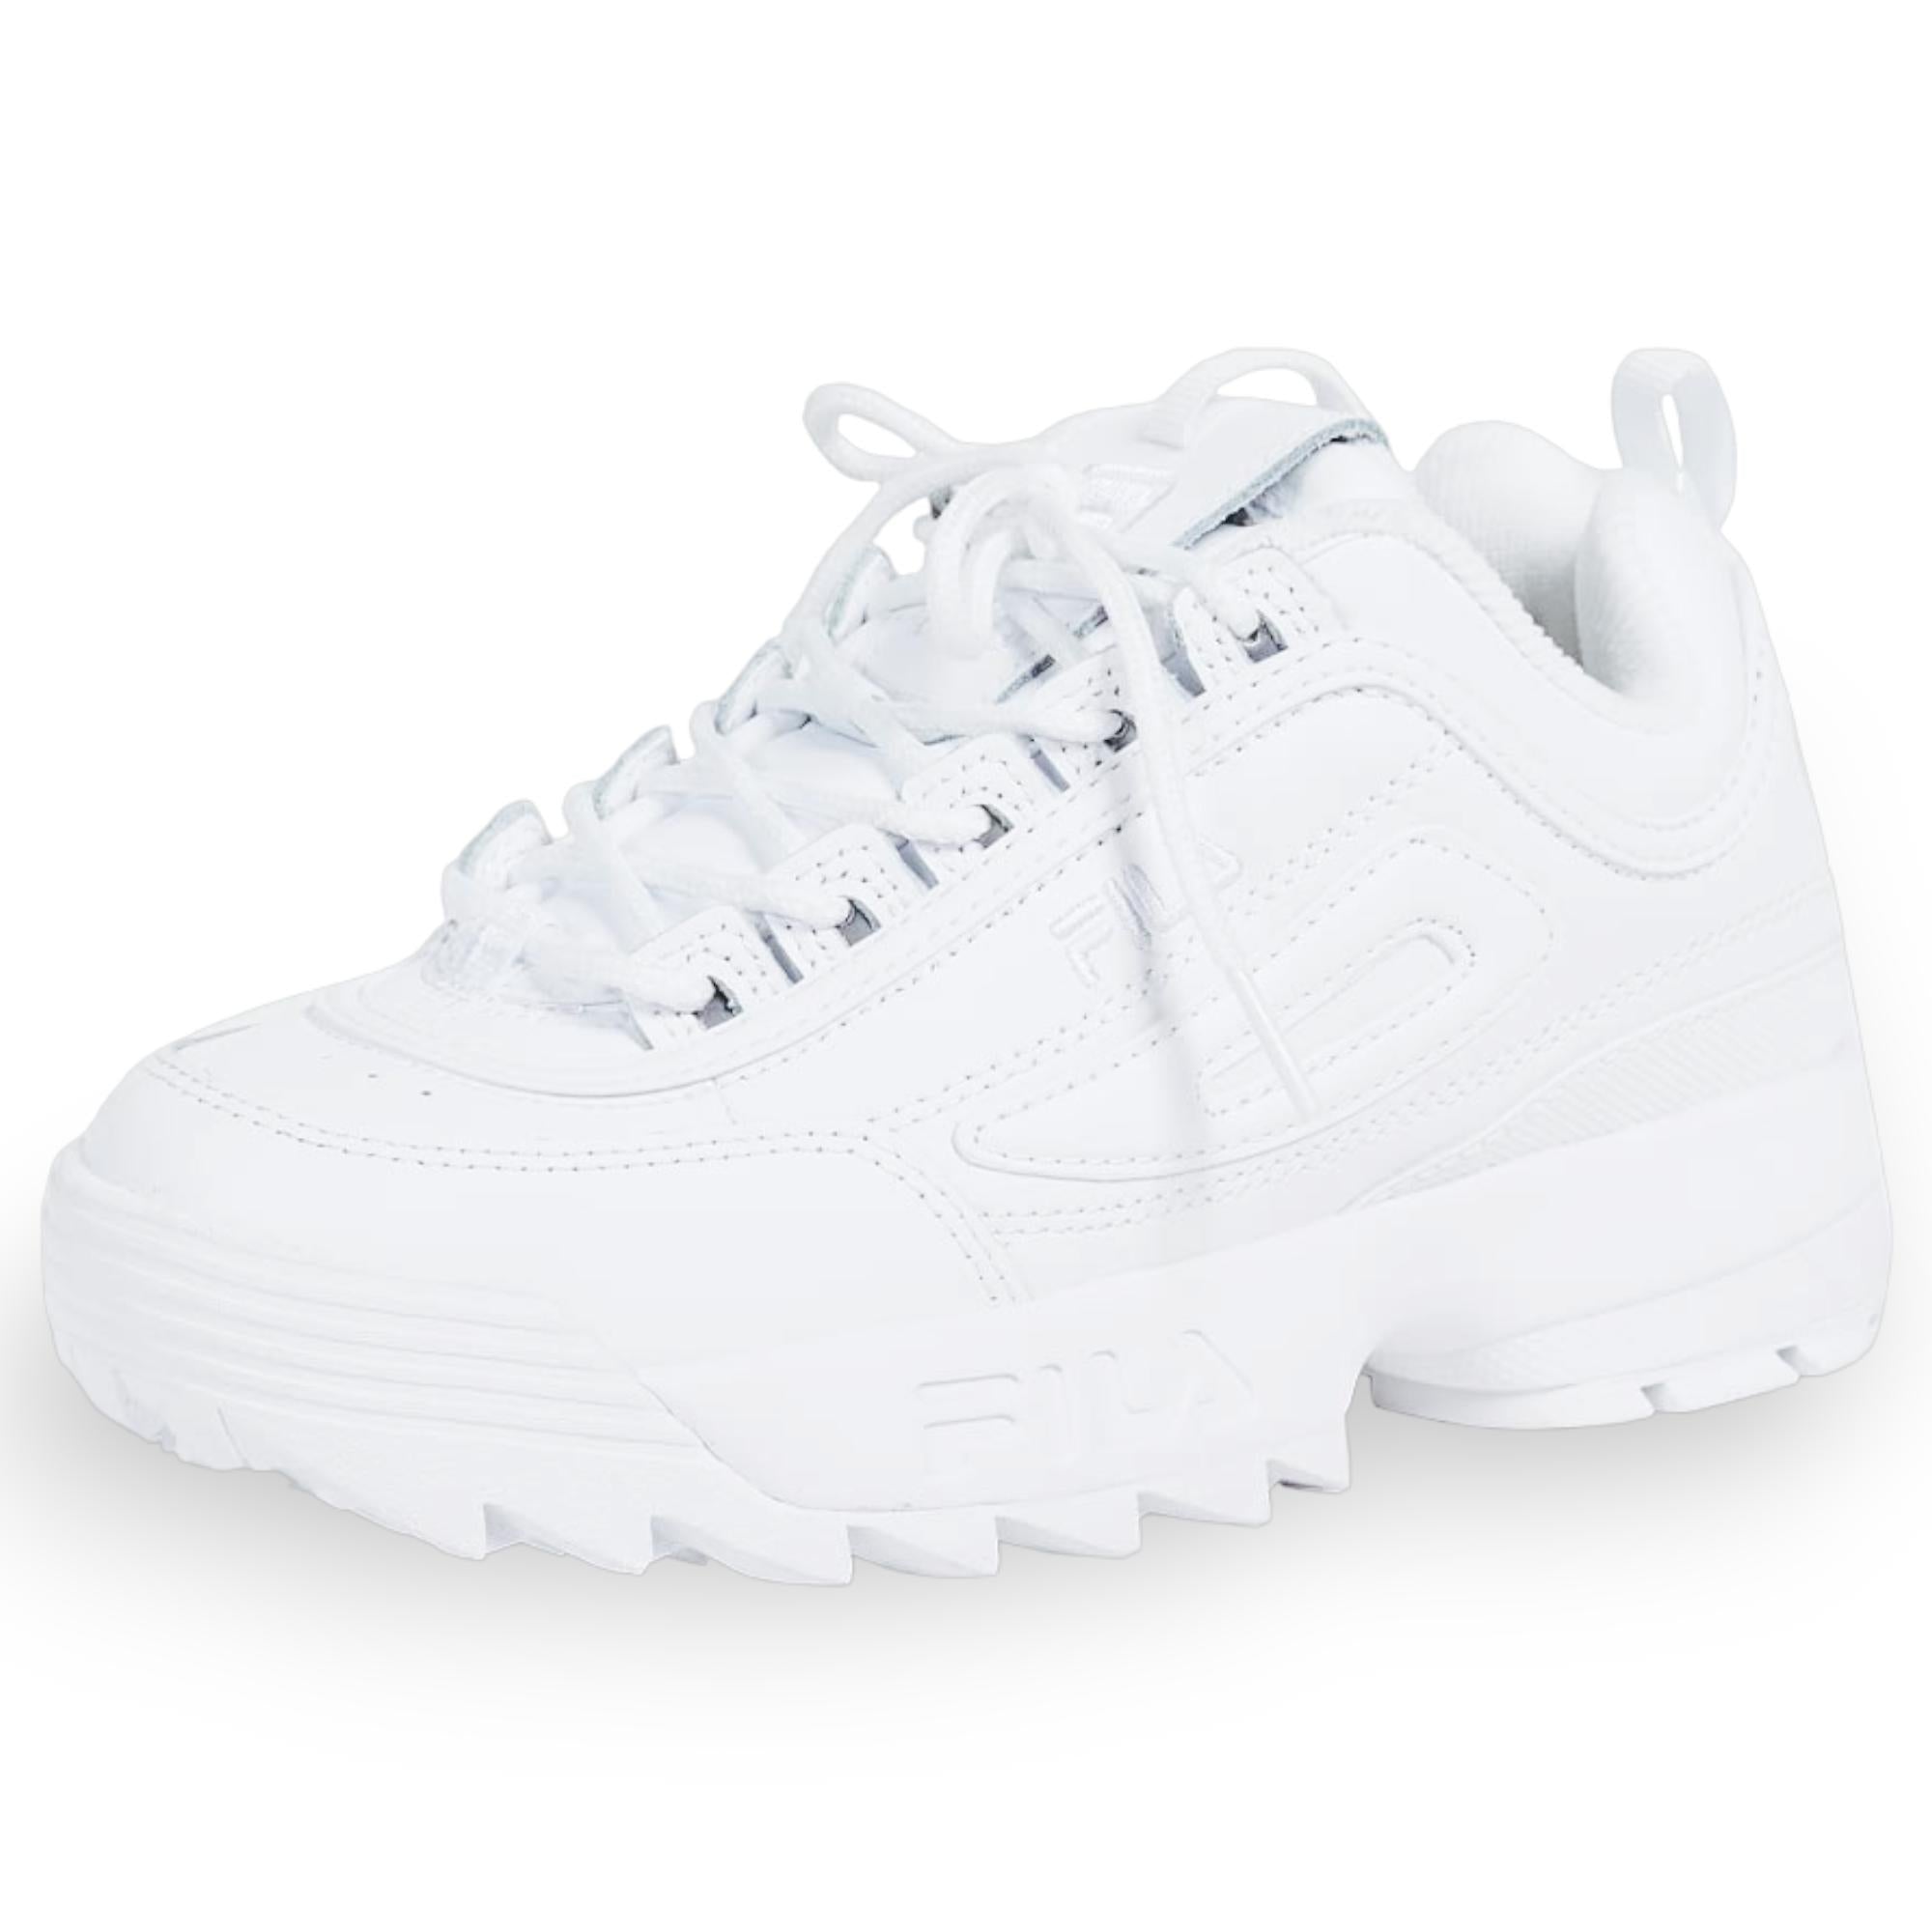 Fila Women's Disruptor 2 II Sneaker All White Comfortable Walking Shoe